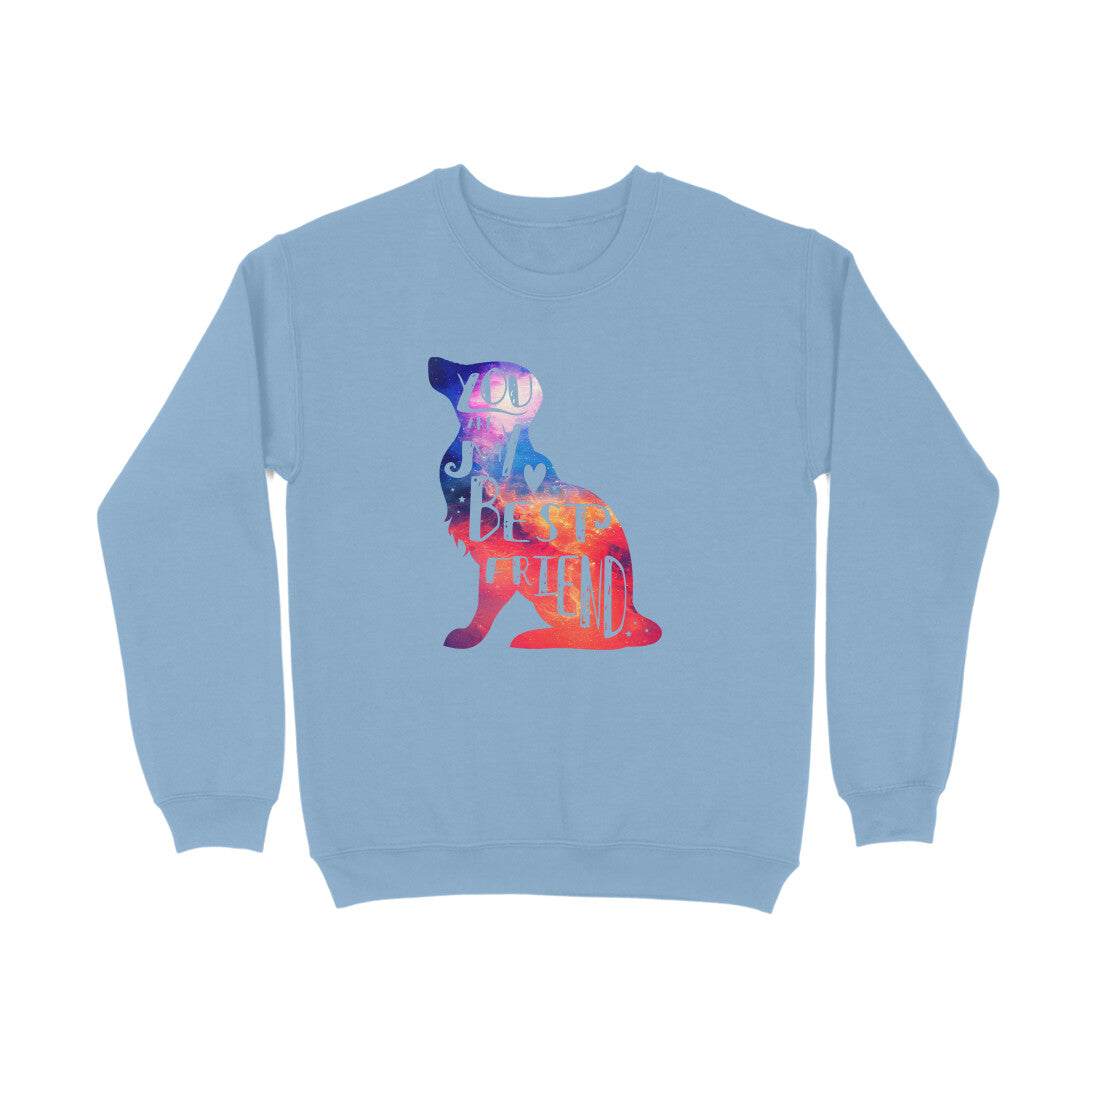 Stepevoli Clothing - Sweatshirt (Unisex) - Best Fur-ends Forever (7 Colours)